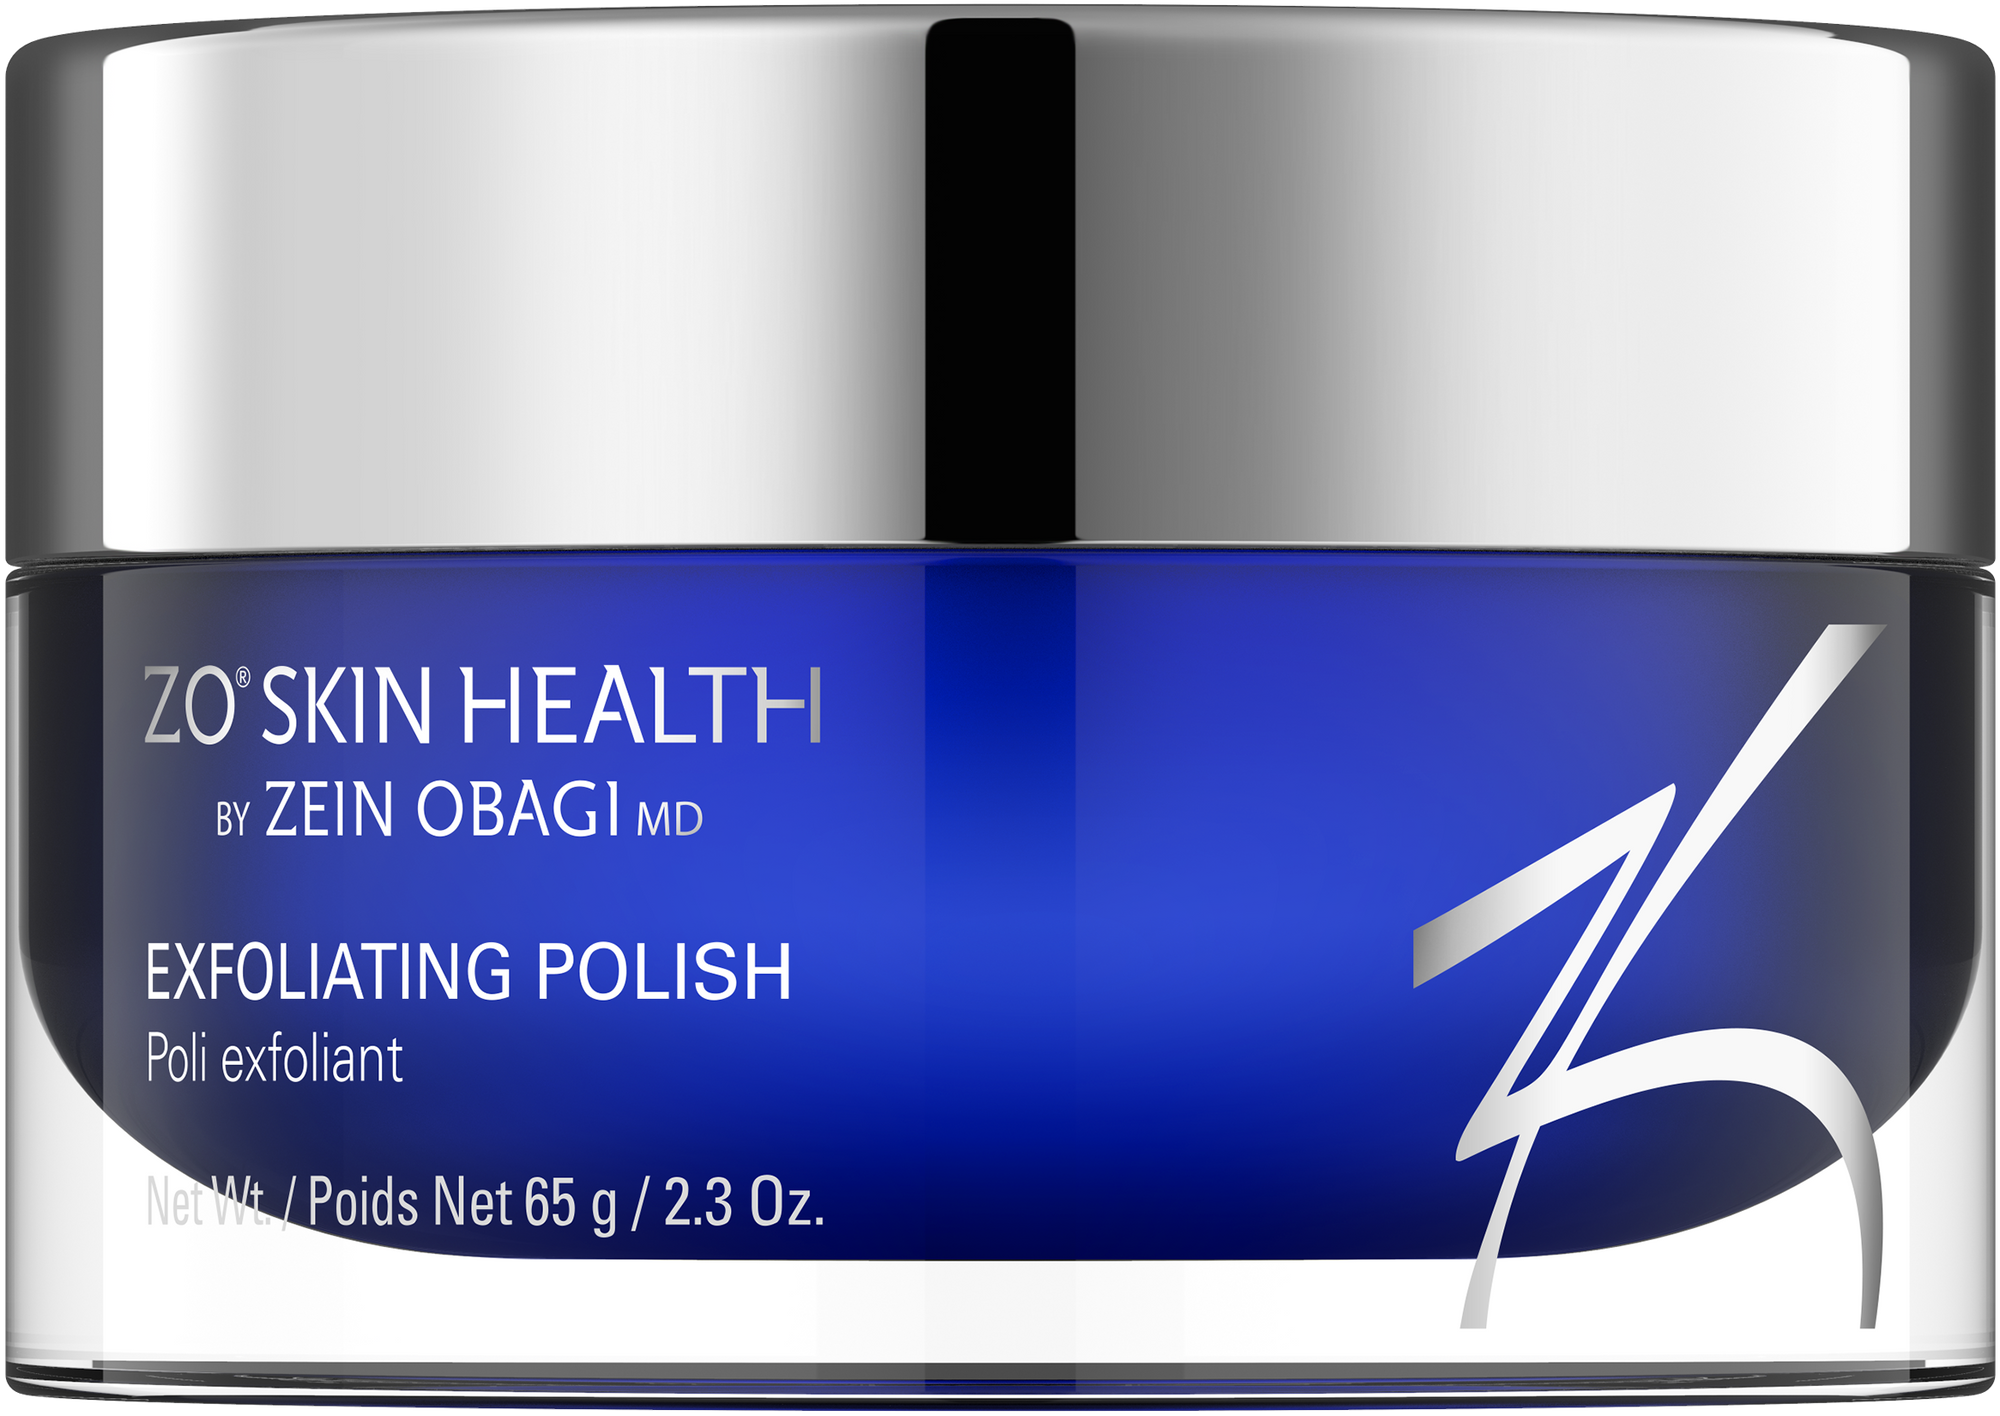 Exfoliating Polish - Avebelle Skin